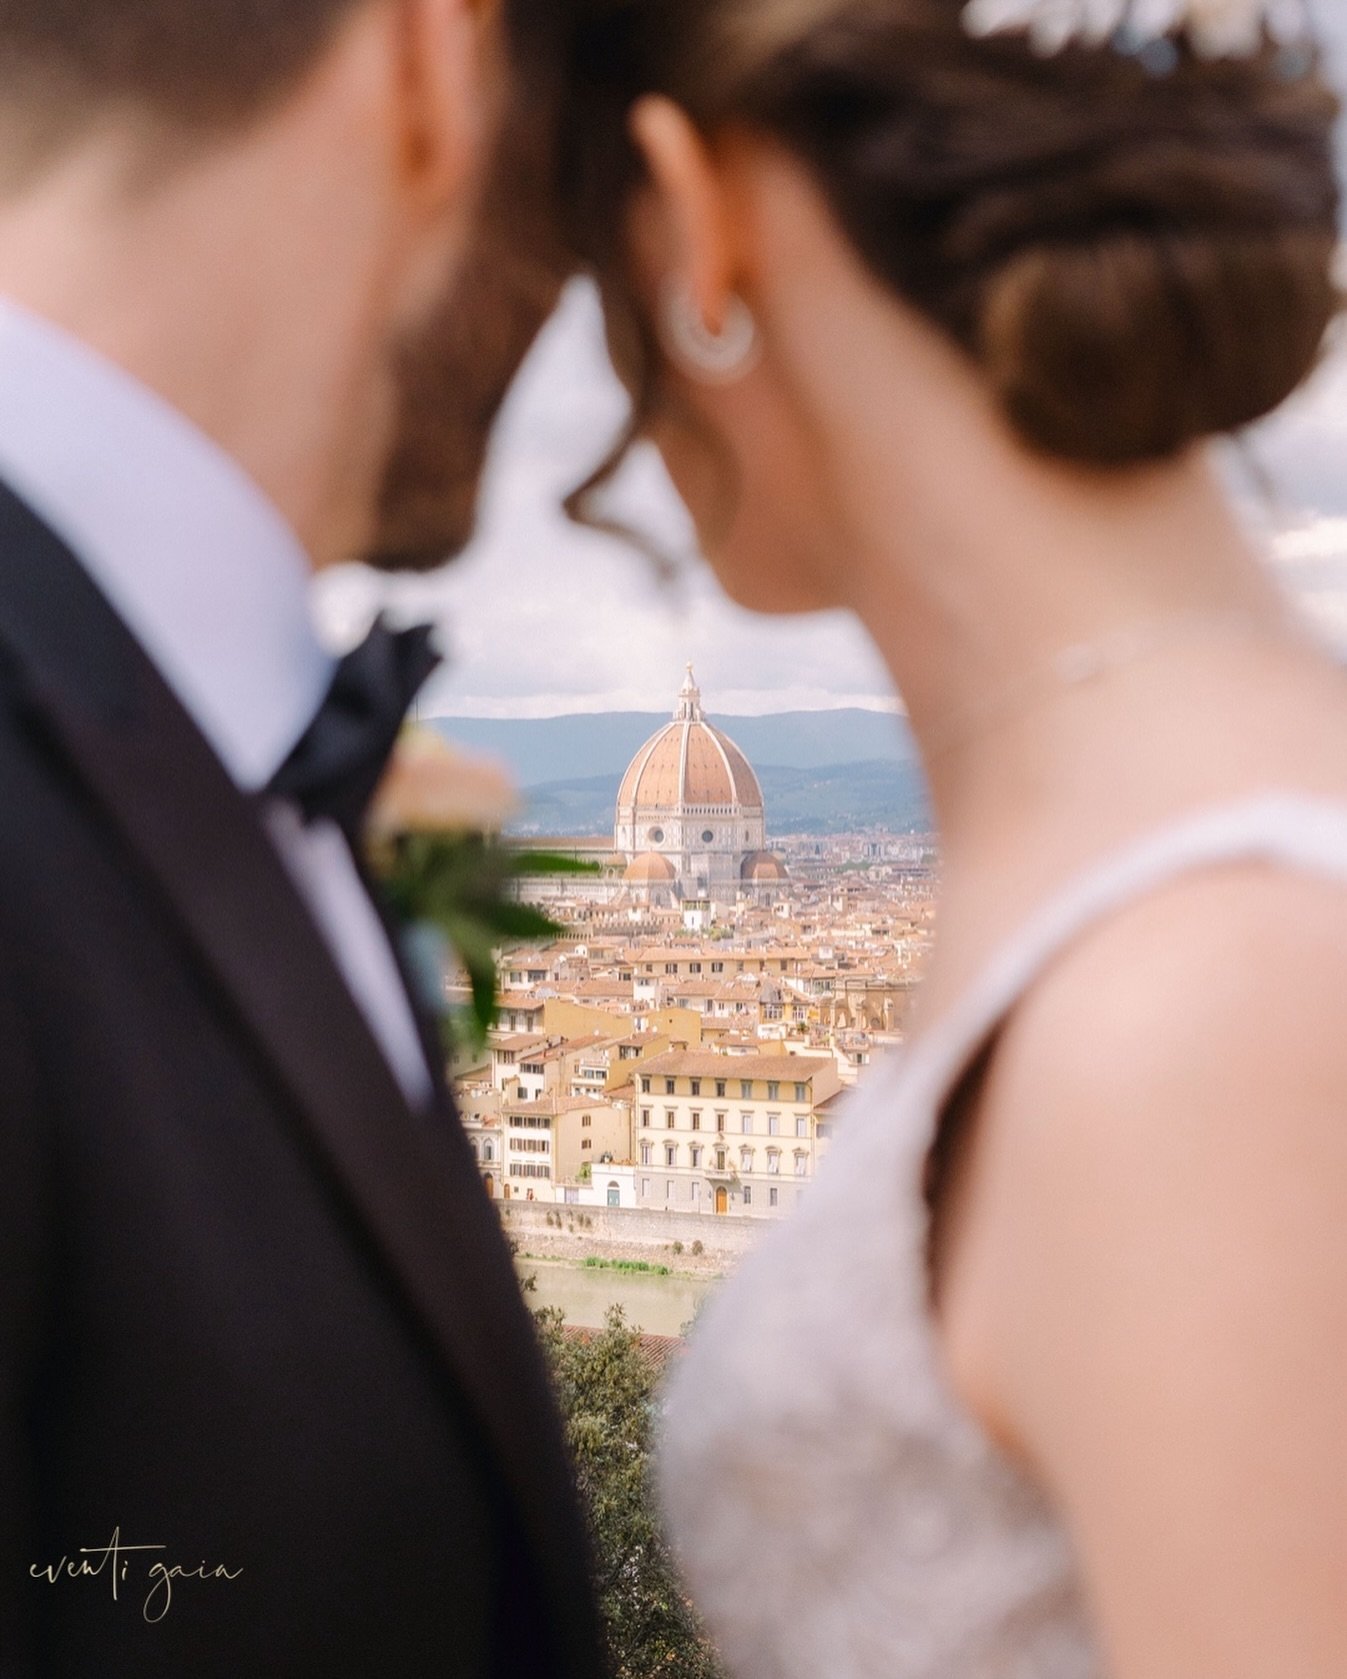 Florence: where romance meets timeless elegance. The perfect city to say 'I do'

#eventigaia #destinationwedding #intimatewedding #weddingplanner #weddinginflorence #weddingplanner #bespokewedding #exclusivewedding #weddinginspiration #destinationwed